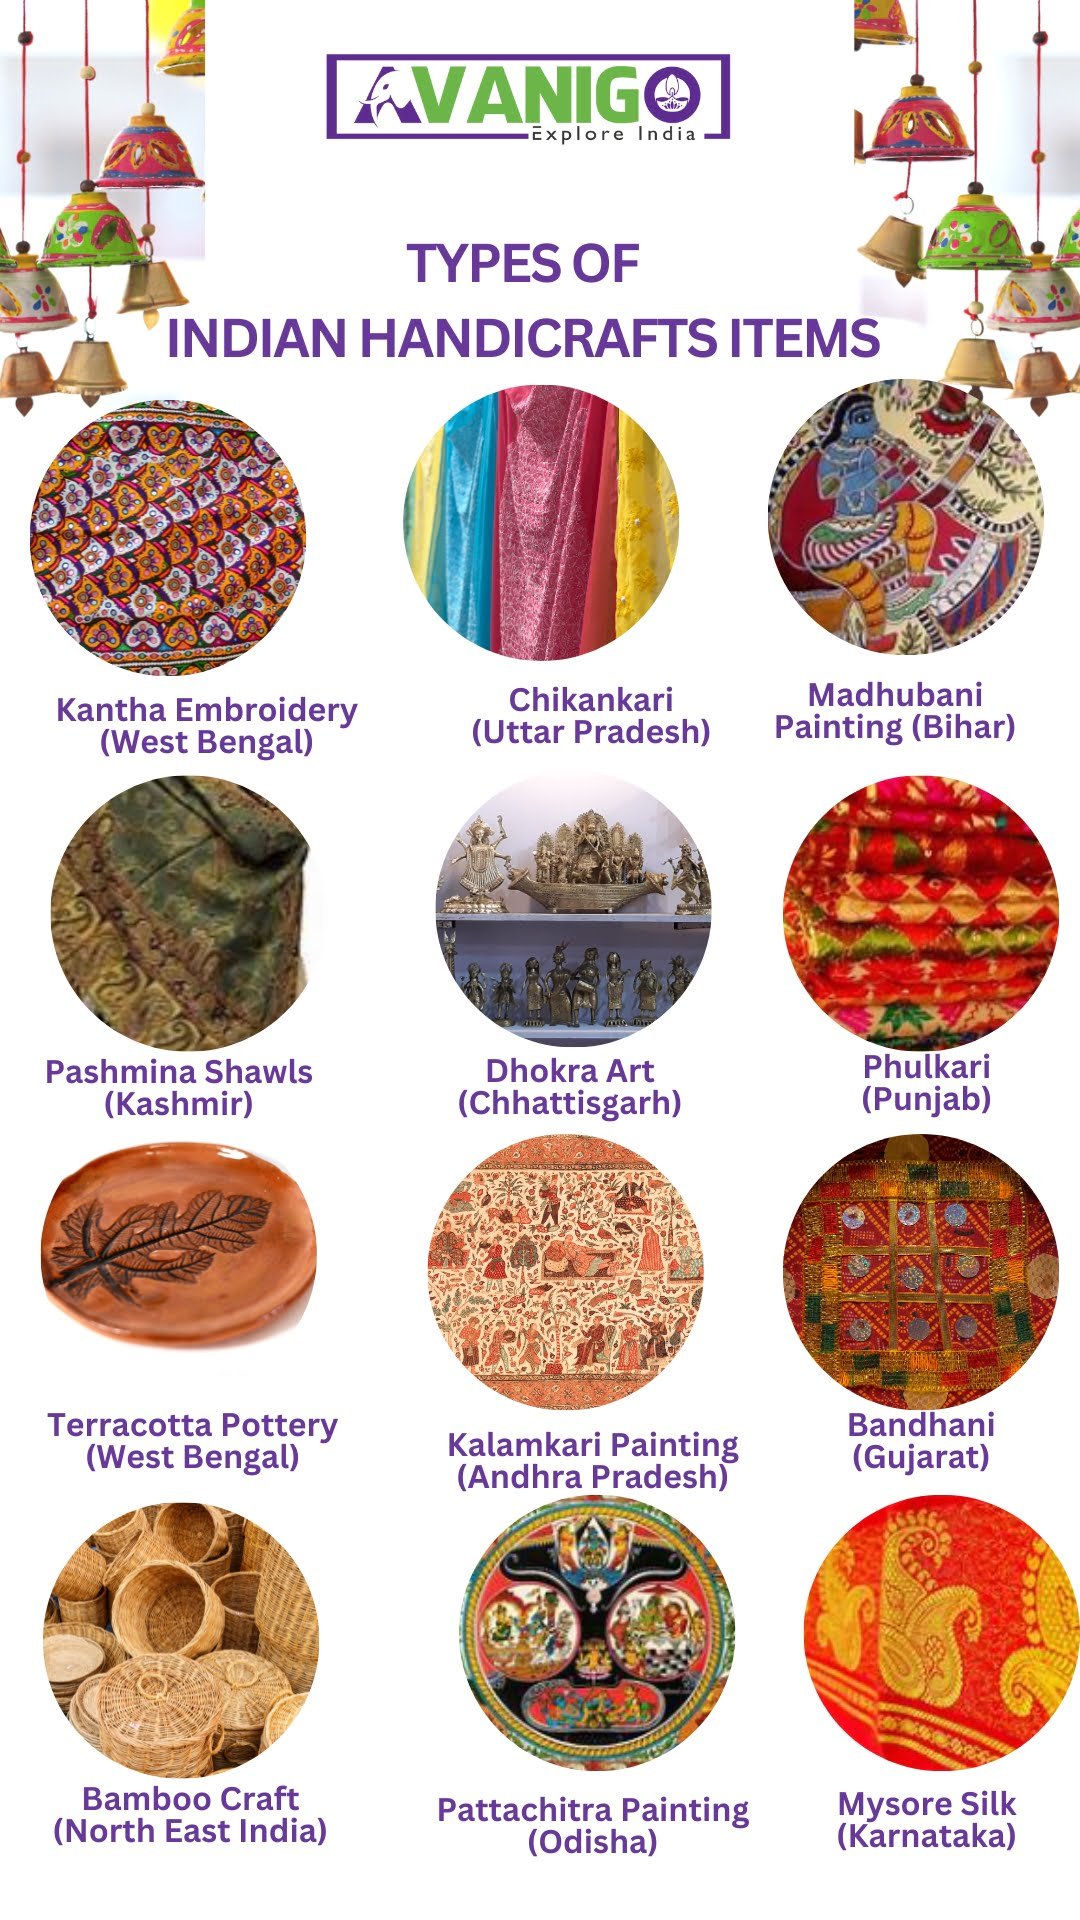 20 Types of Indian Handicrafts Items List of Different States - AvaniGo